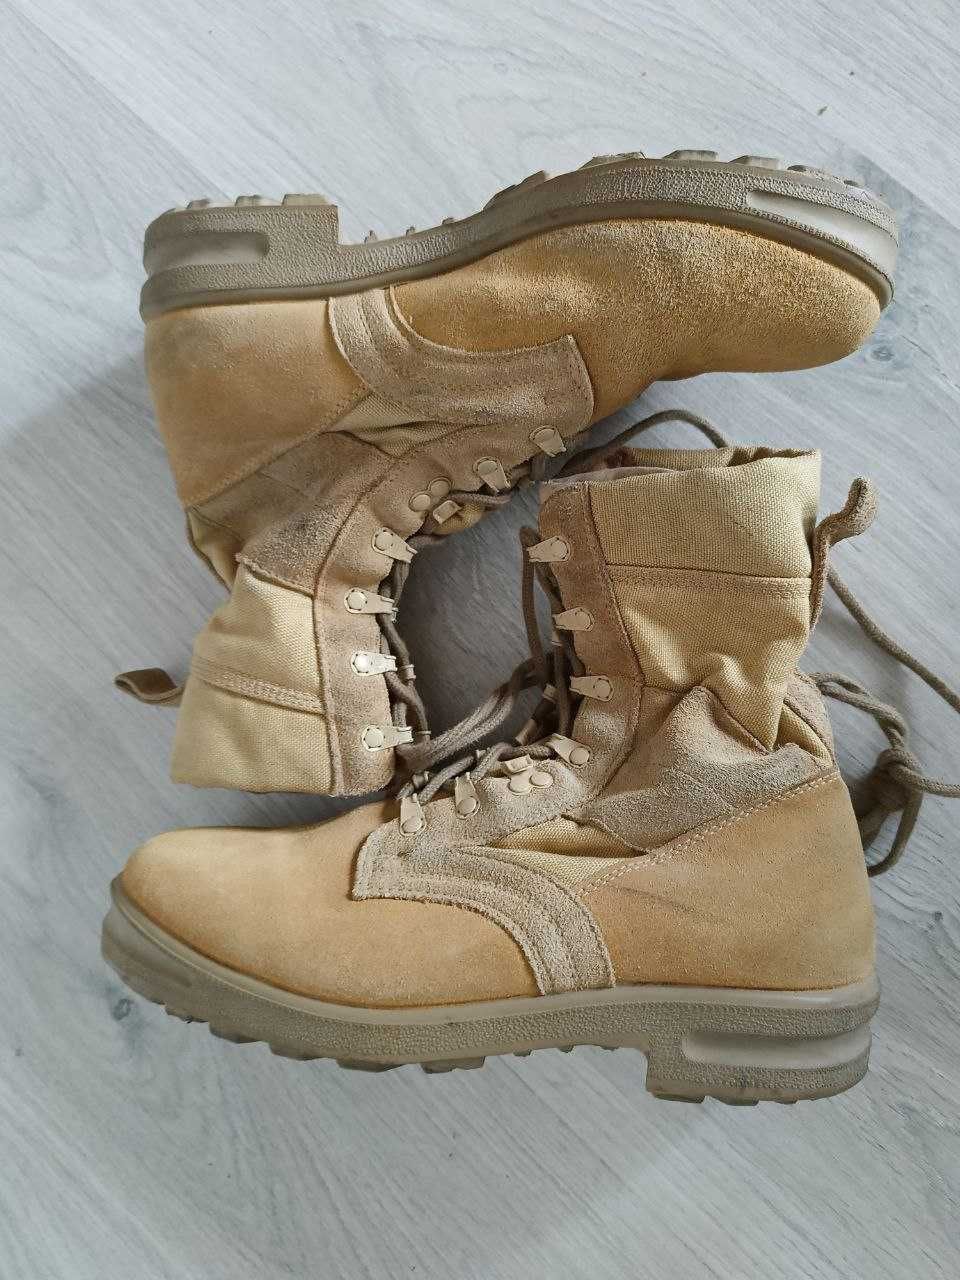 Берці BW Baltes desert boots, tropenstiefel Б/У Німечинна оригінал